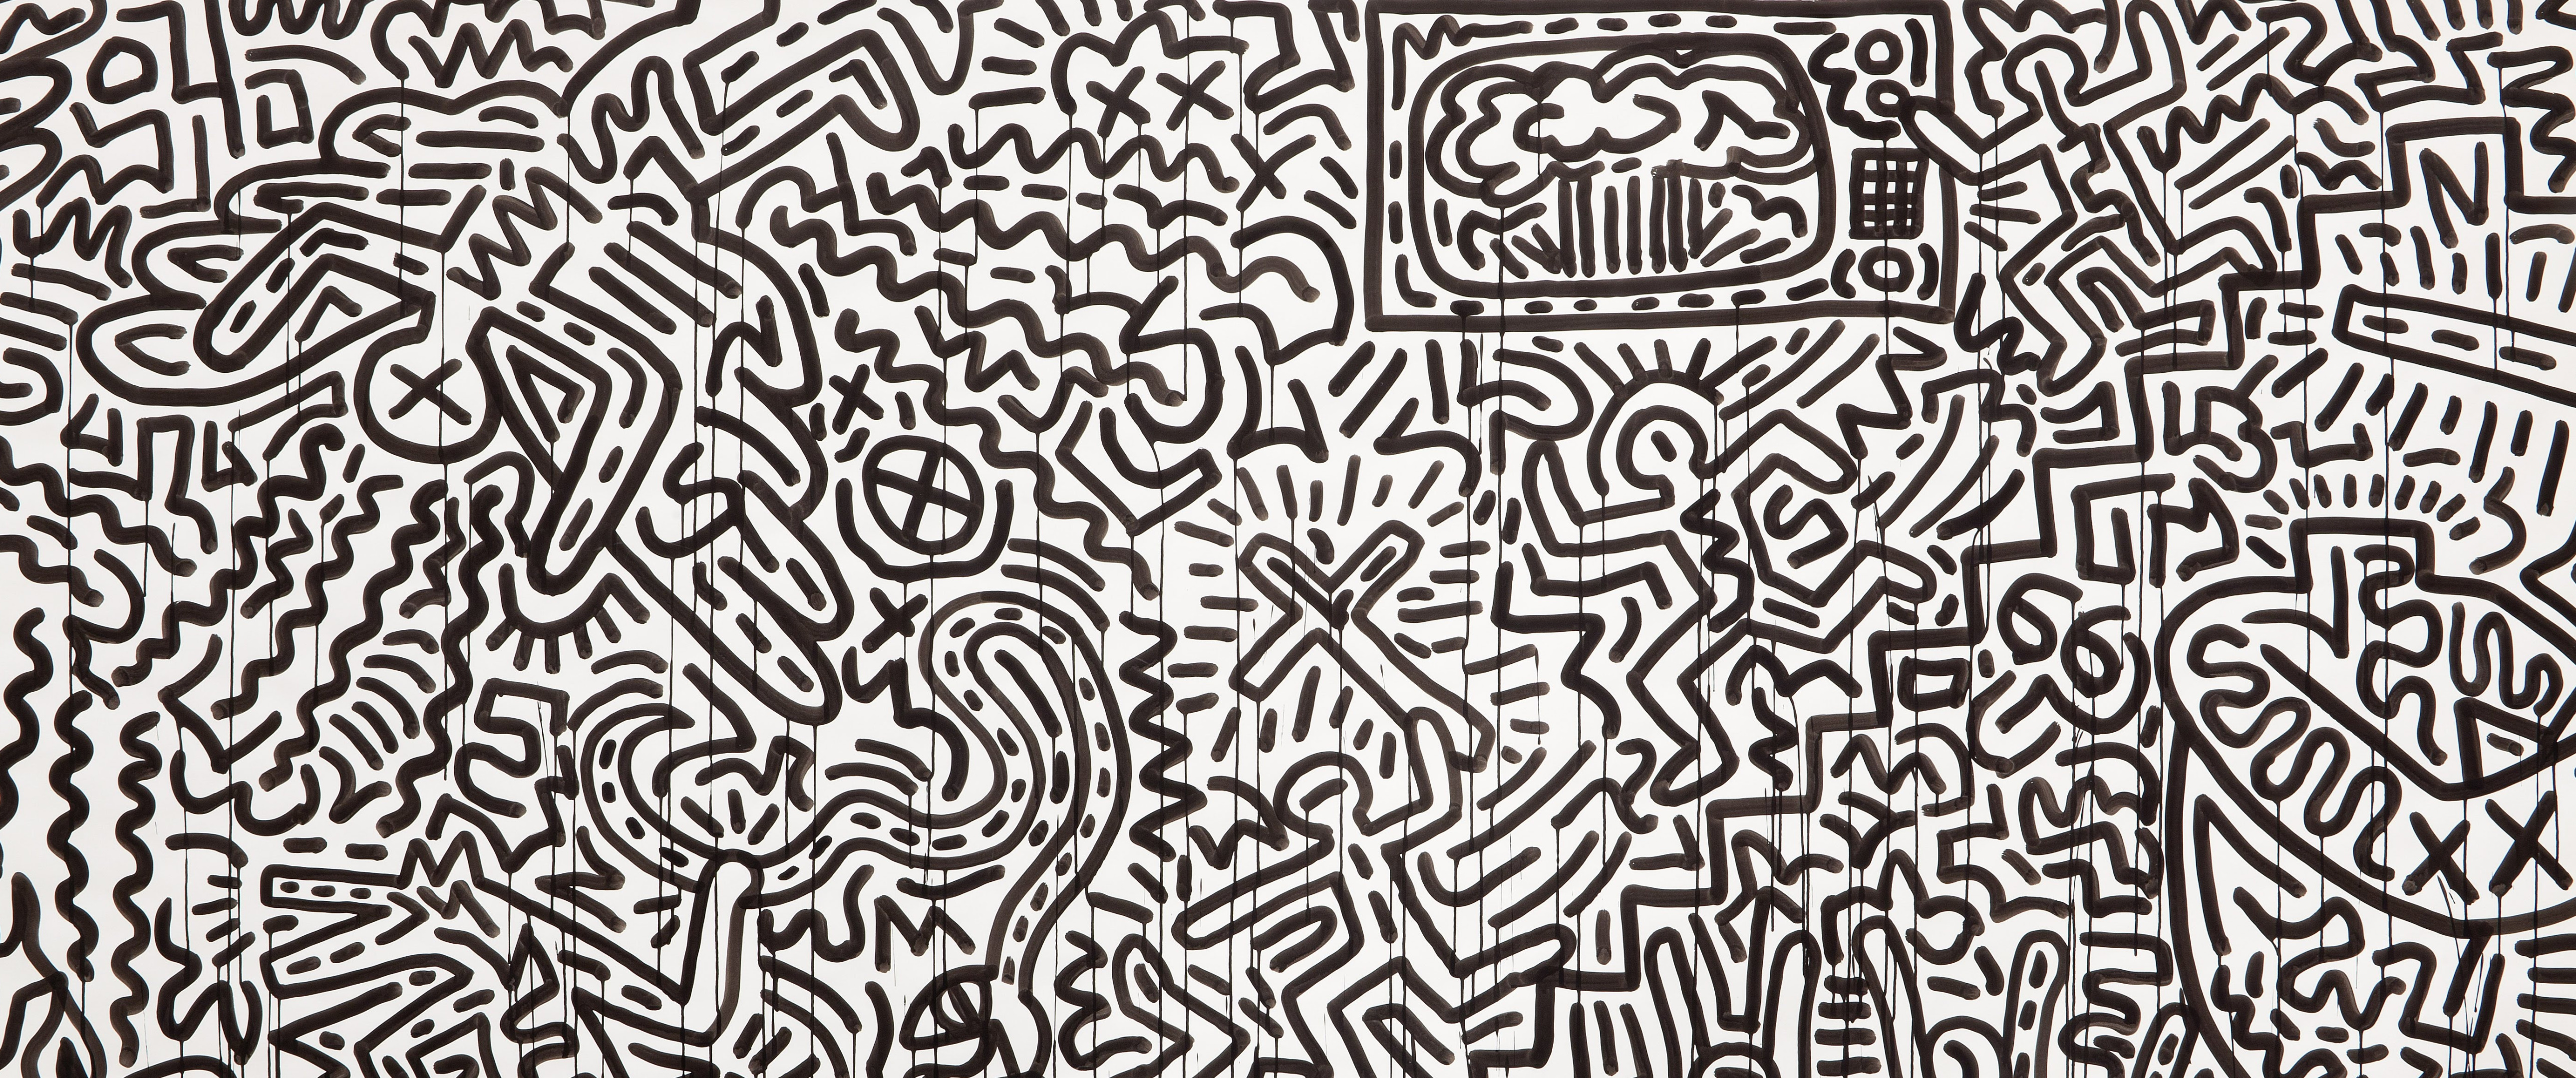 General 5160x2160 Keith Haring pop art paper ink drawing digital art